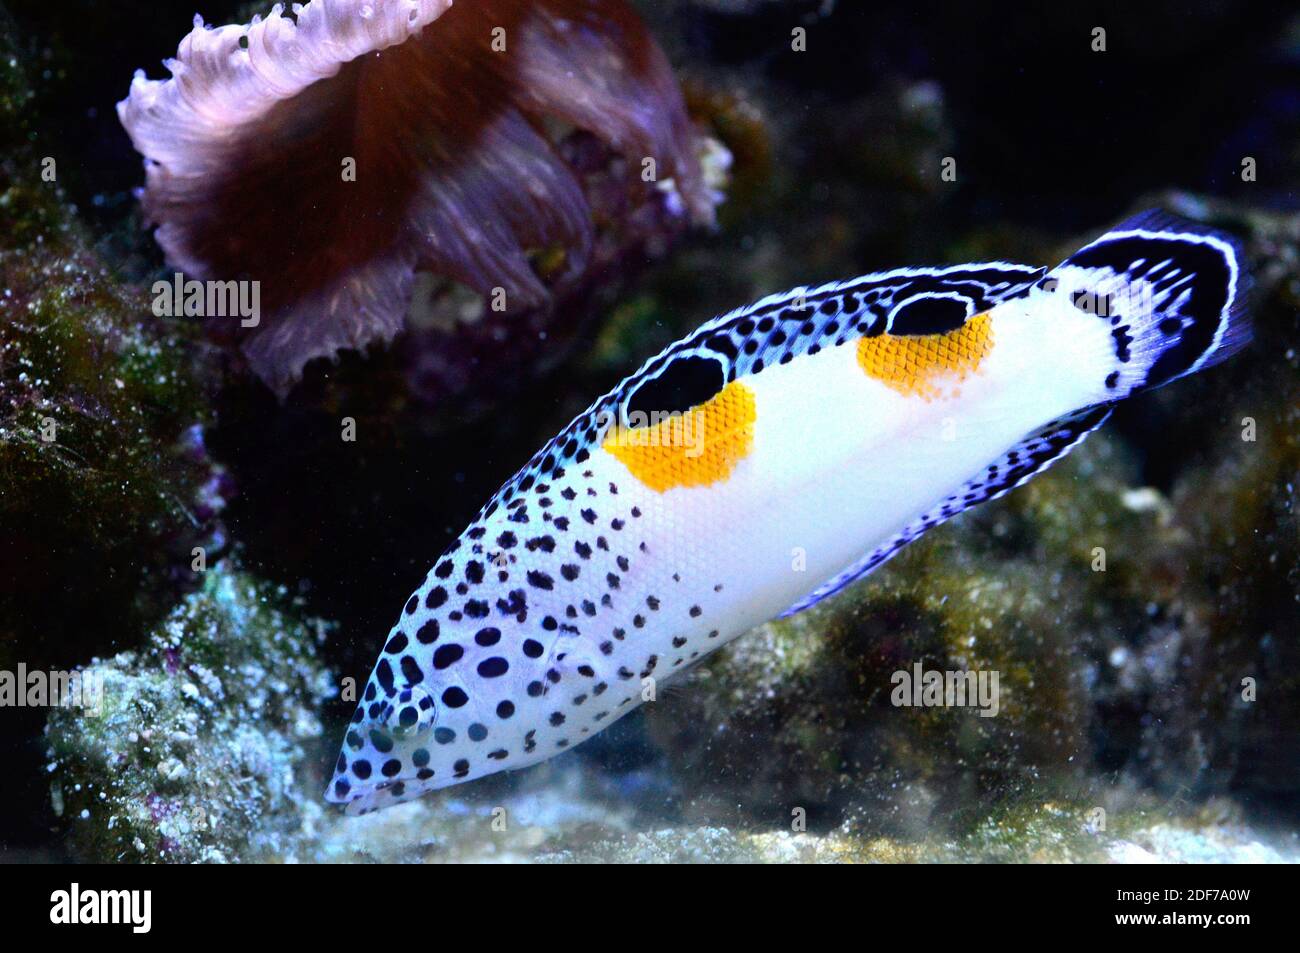 Clown coris (Coris aygula) is a marine fish native to tropical Indo-Pacific Ocean. Juvenil specimen with false eyes. Stock Photo